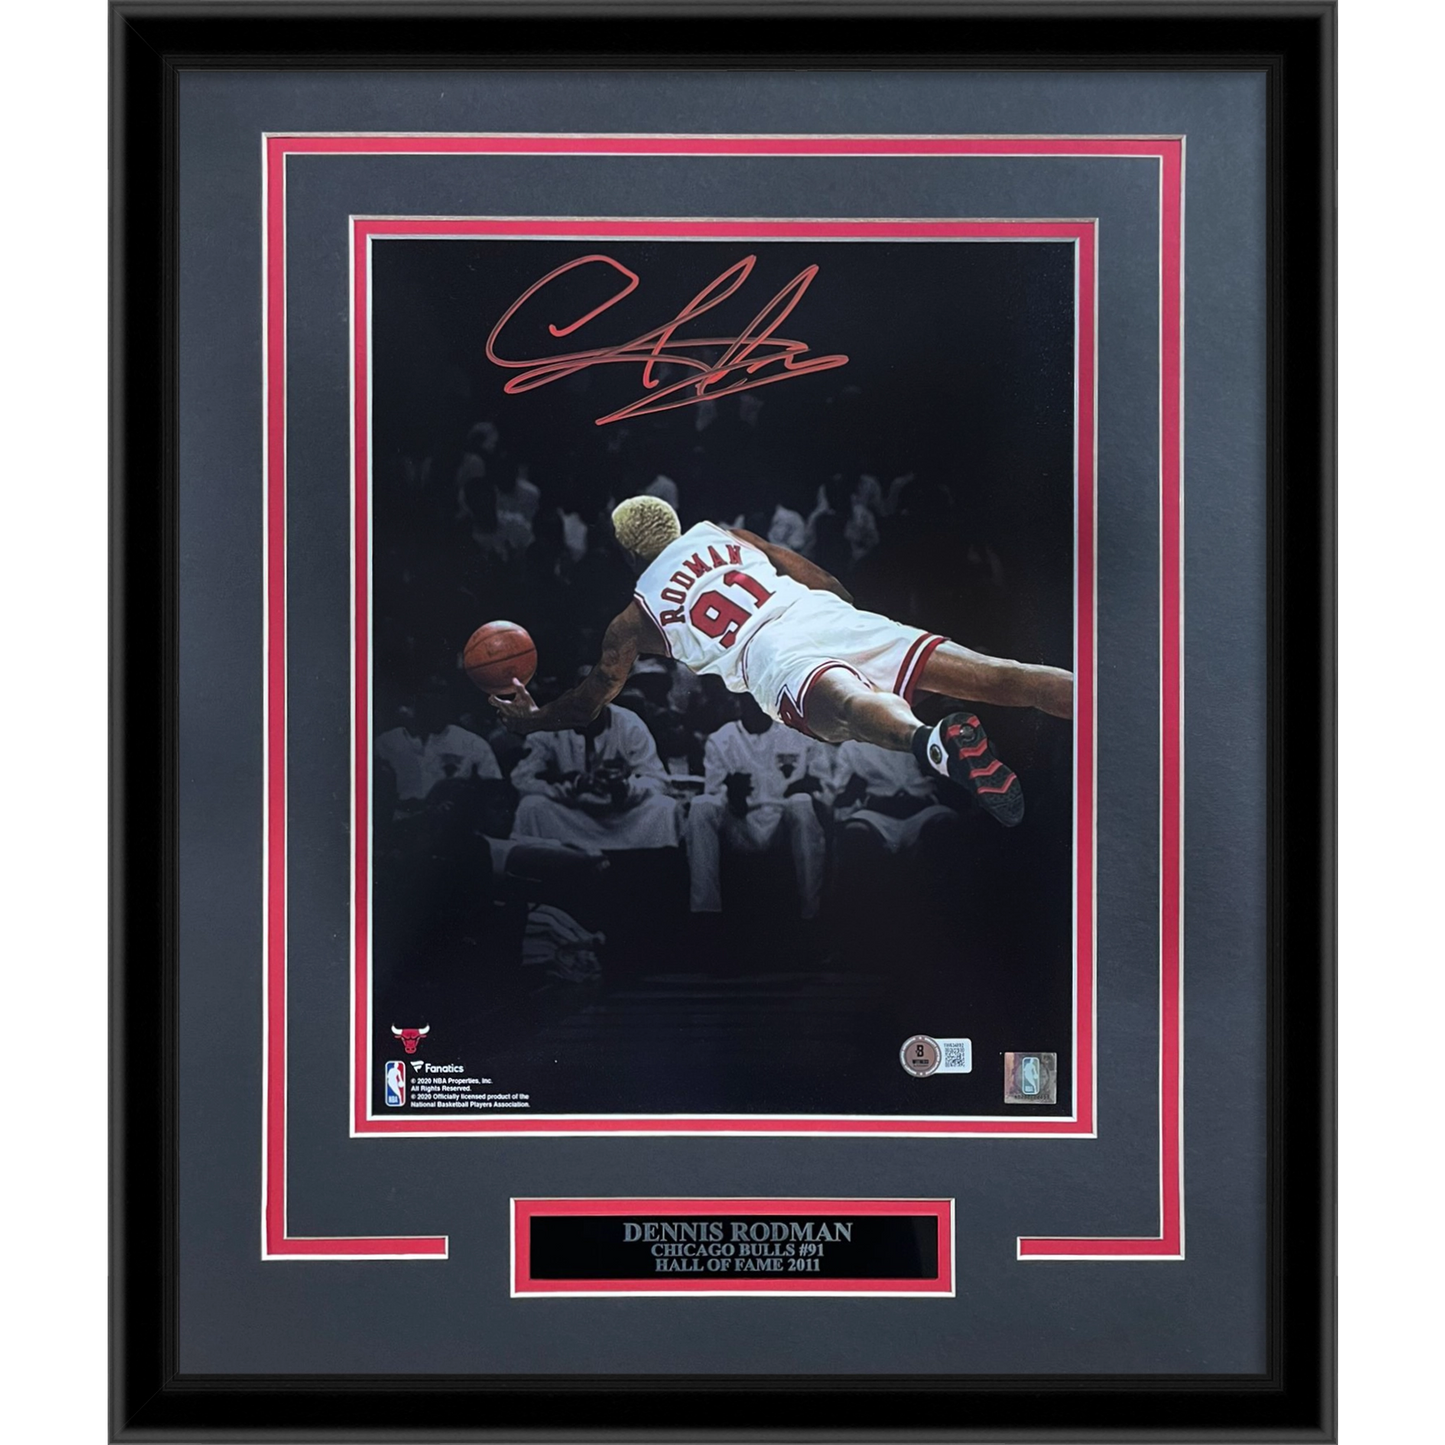 Dennis Rodman Autographed Chicago Bulls (Spotlight Dive) Deluxe Framed 11x14 Photo - JSA